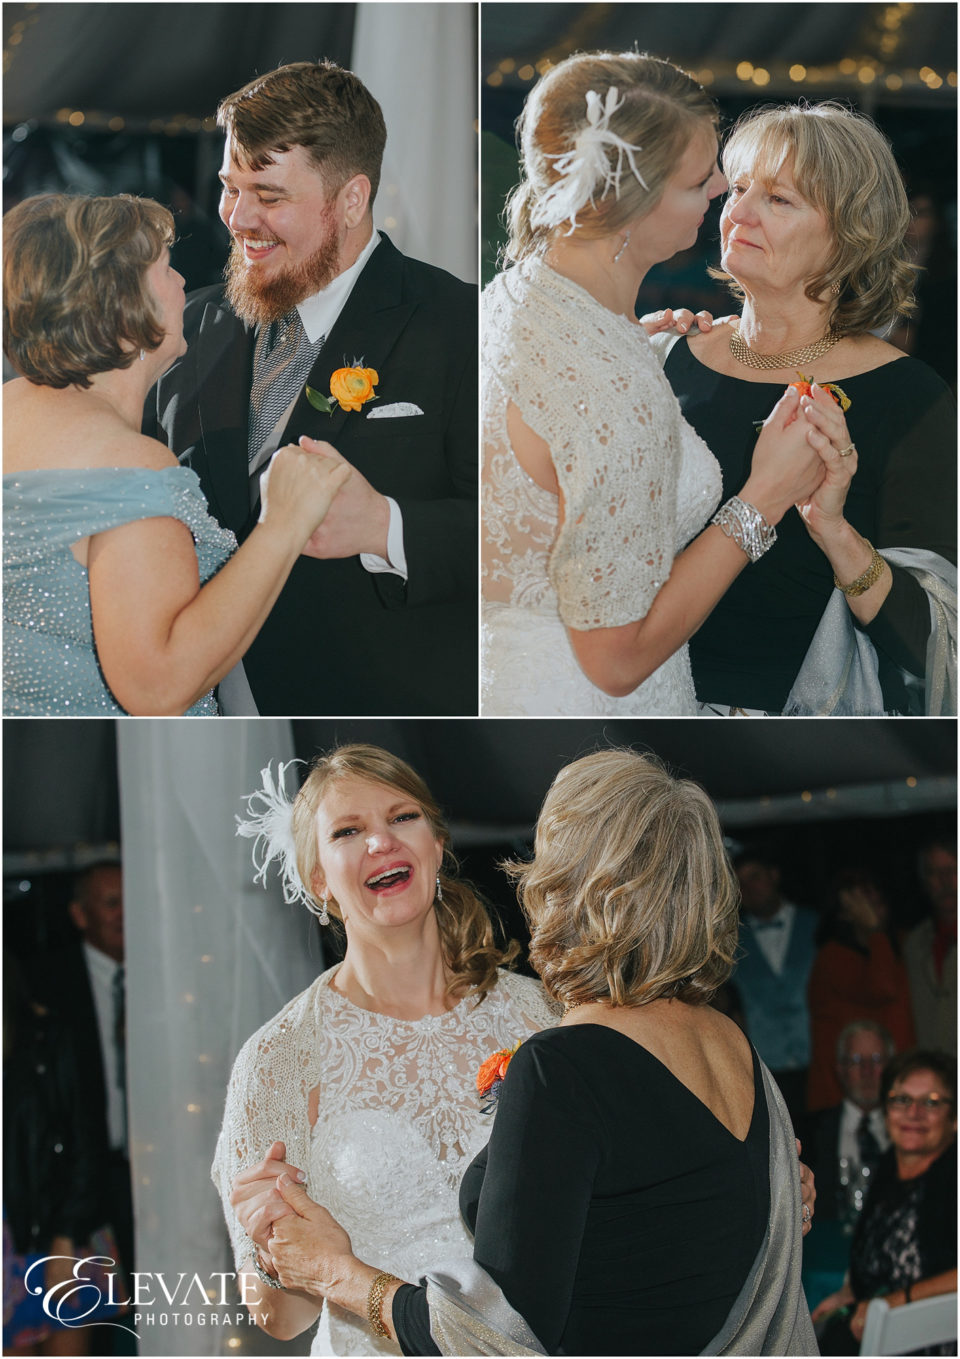 Wedding mom dances